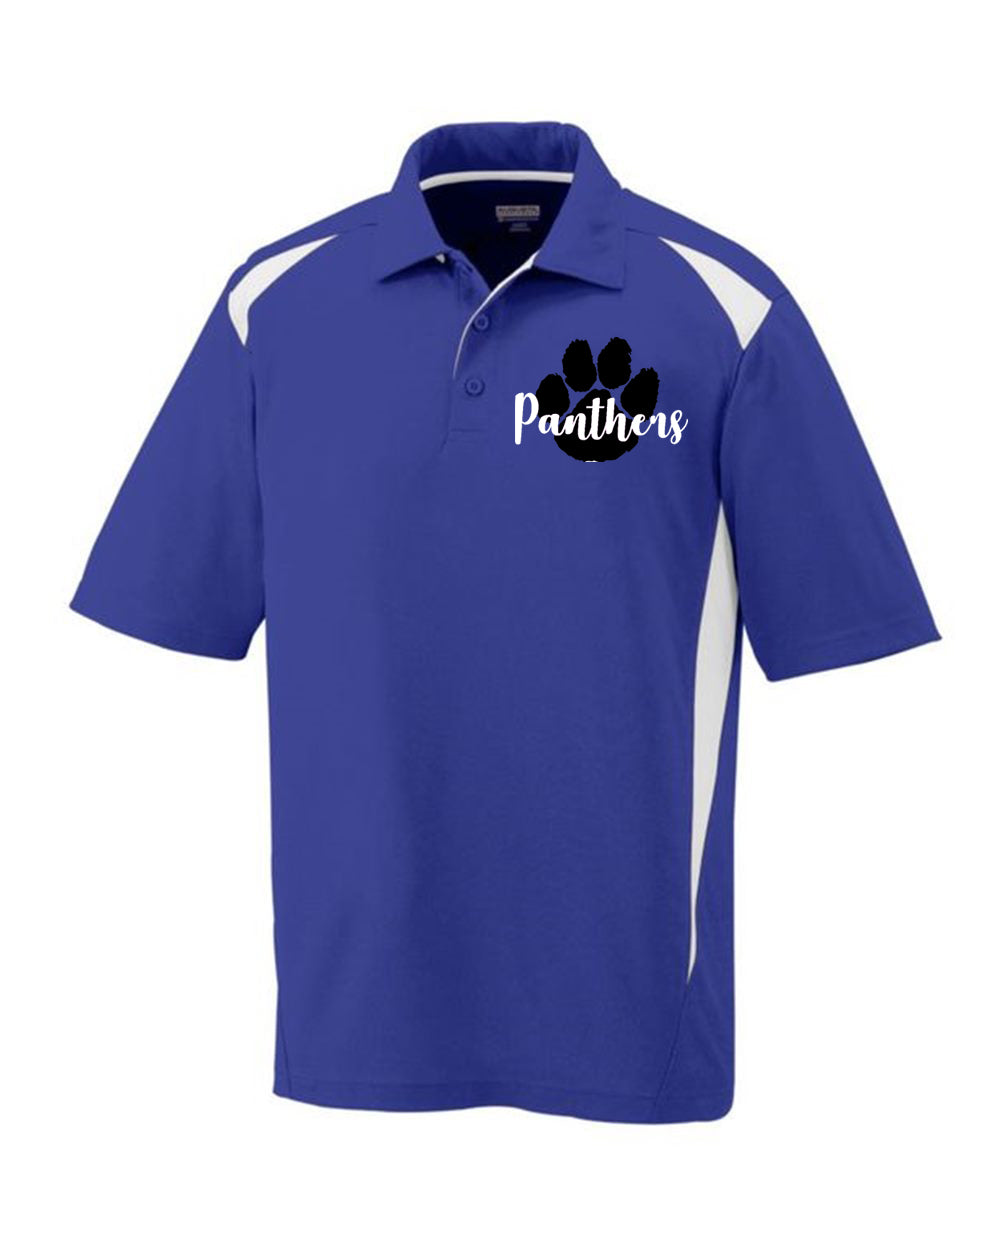 ANDOVER Augusta Sportswear - Two-Tone Premier Sport Shirt - 5012